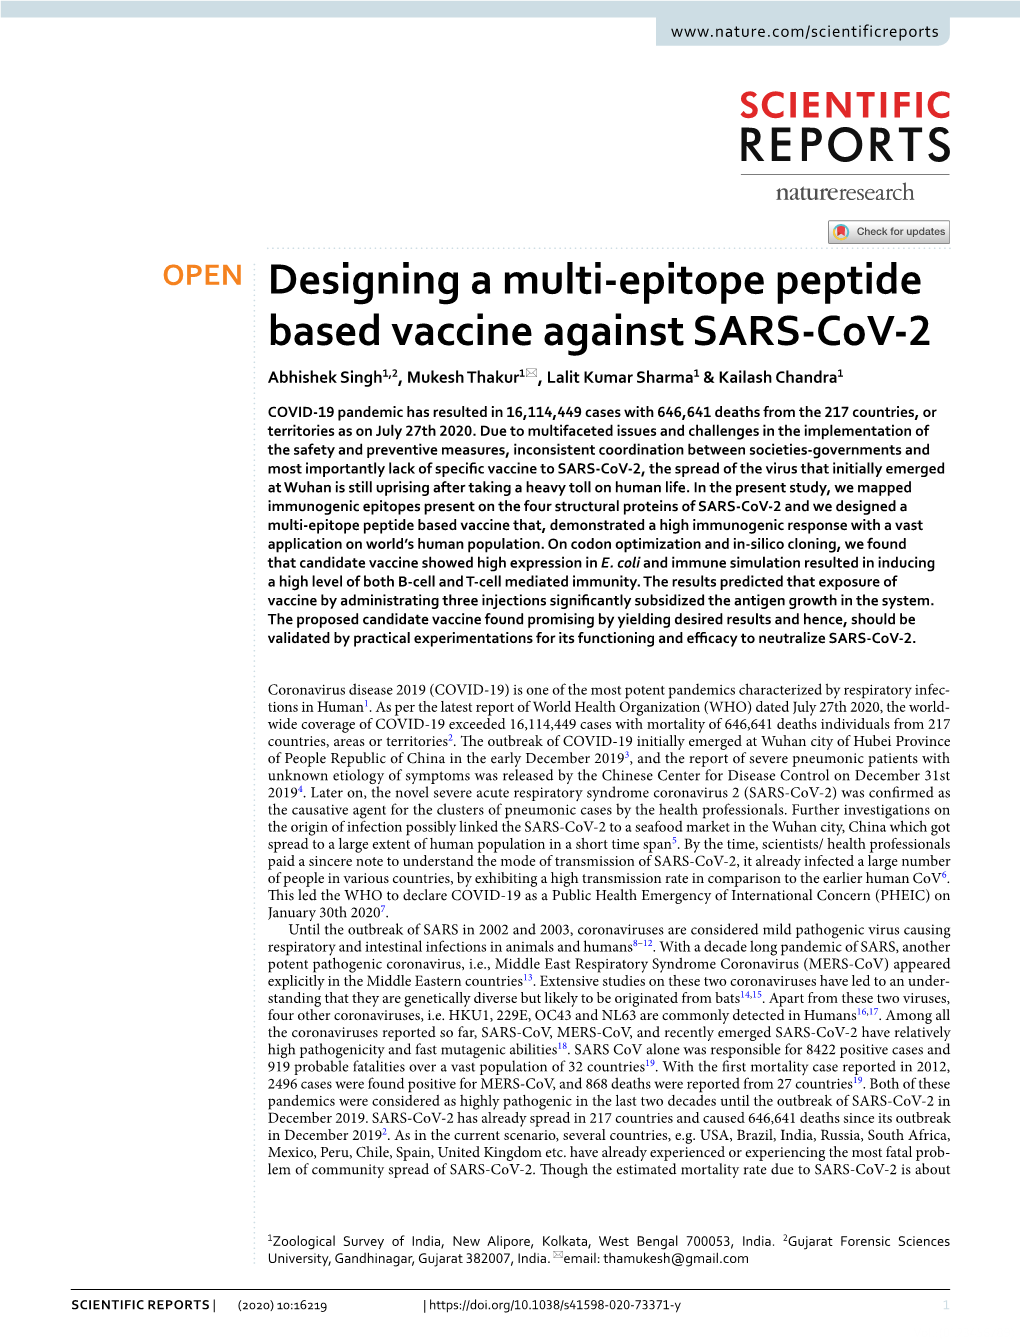 Designing a Multi-Epitope Peptide Based Vaccine Against SARS-Cov-2